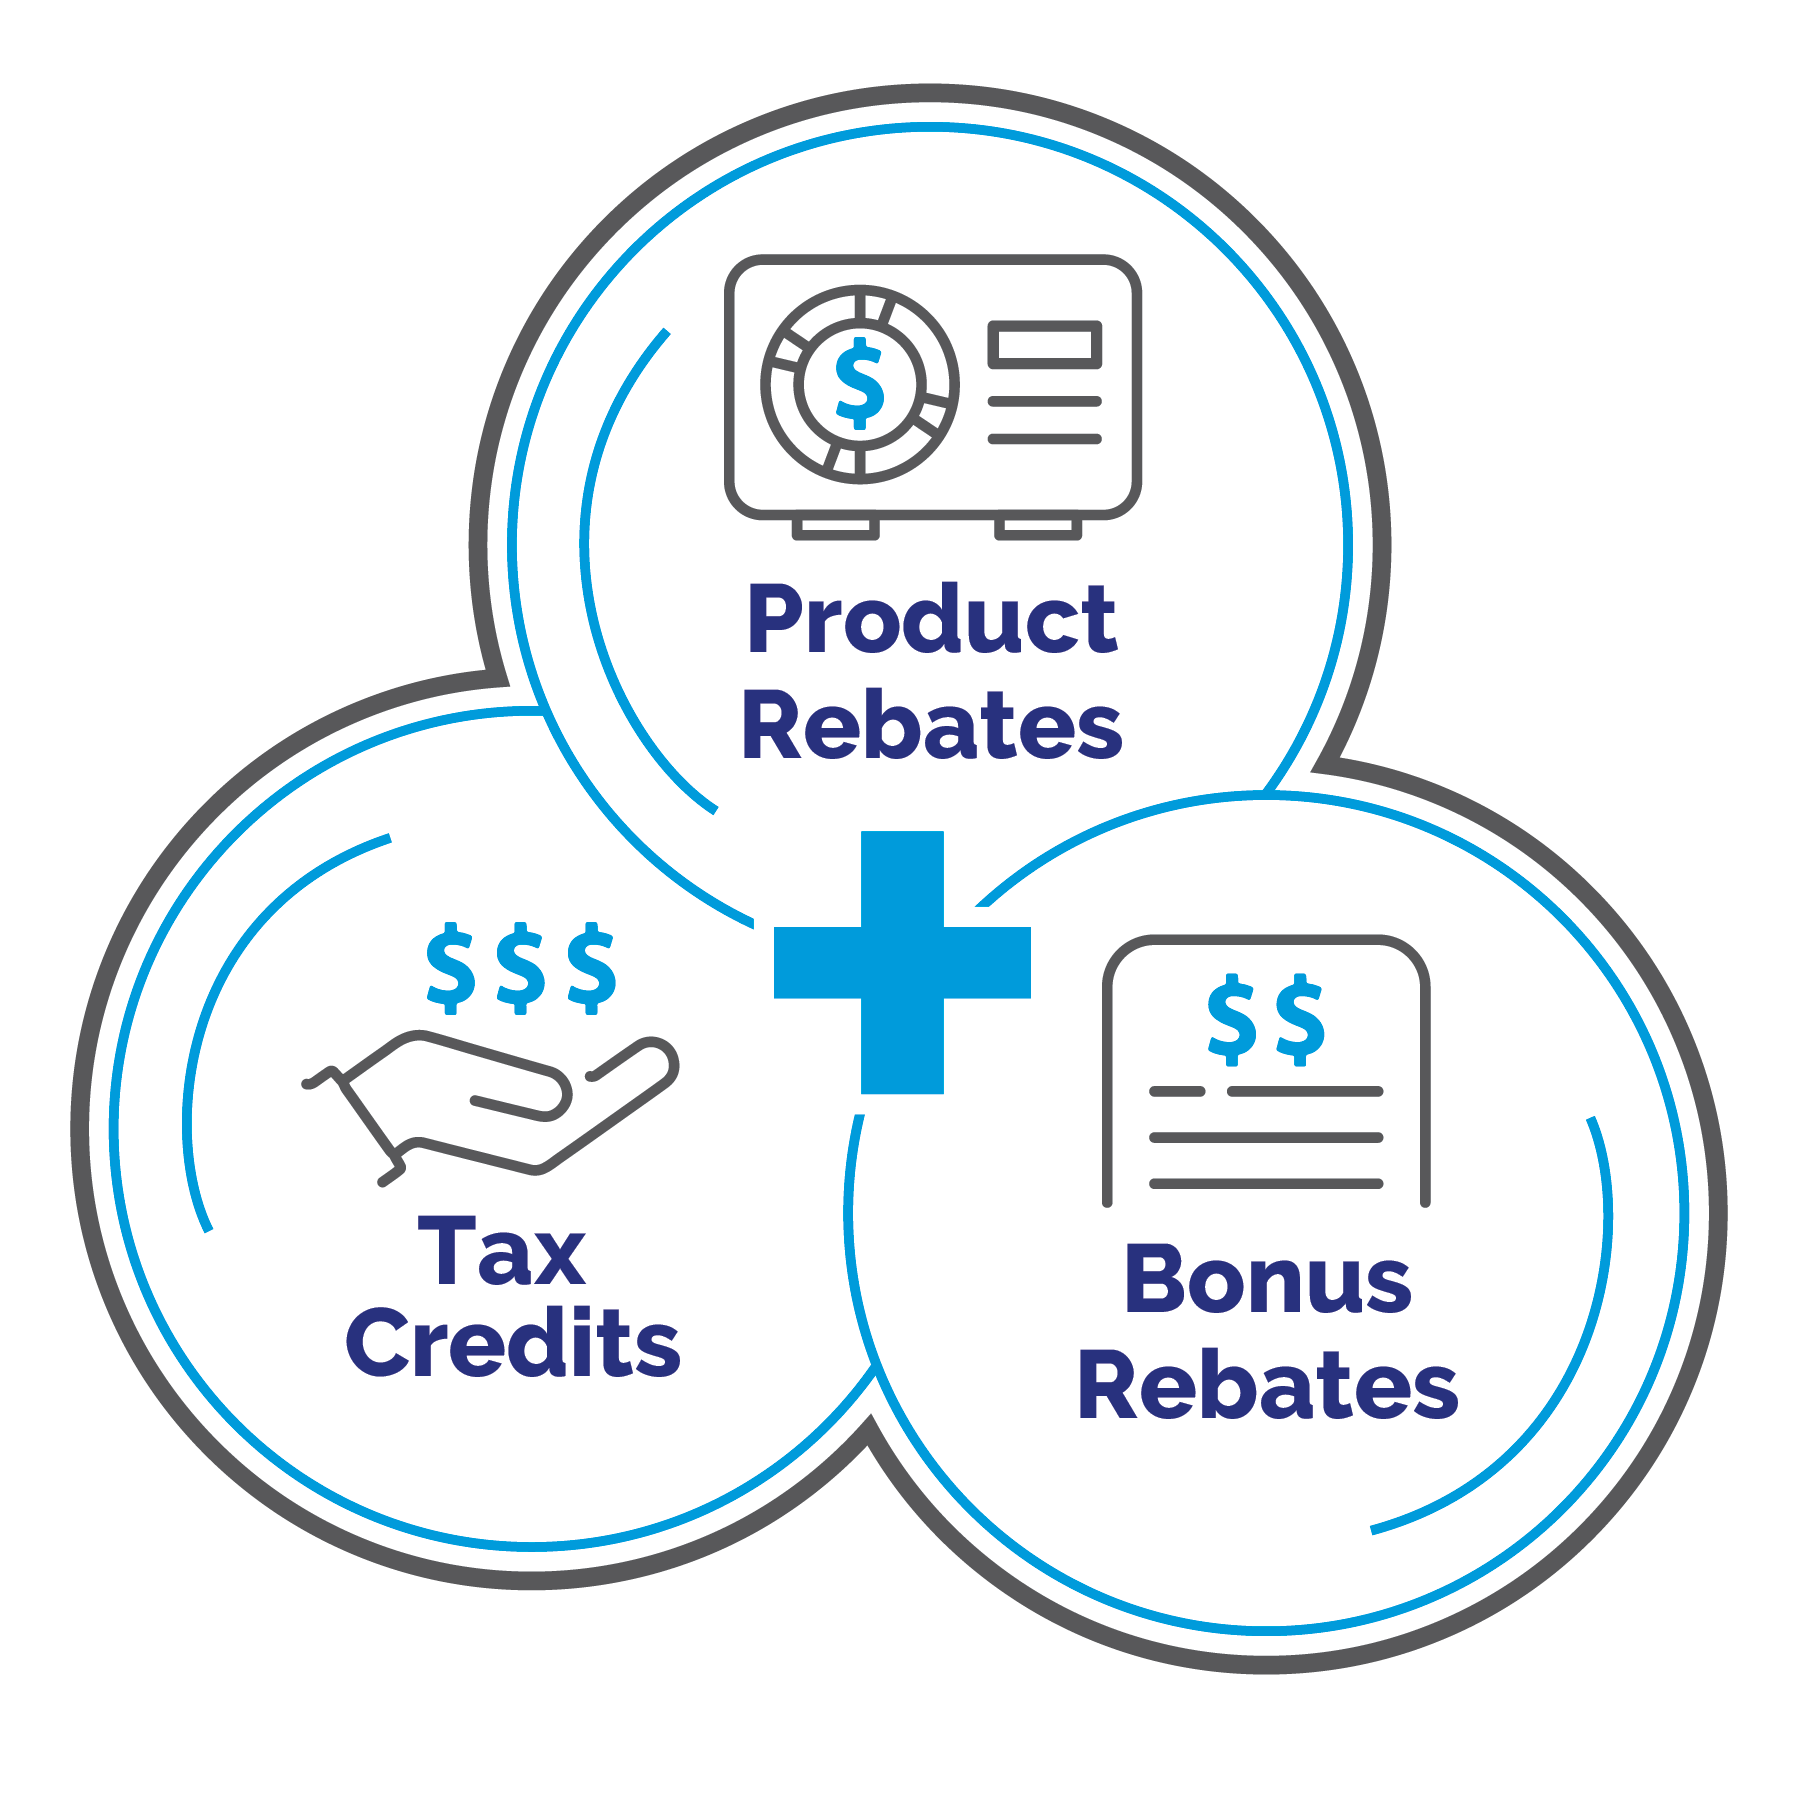 Infographic for product rebates, tax credits, and bonus rebates.